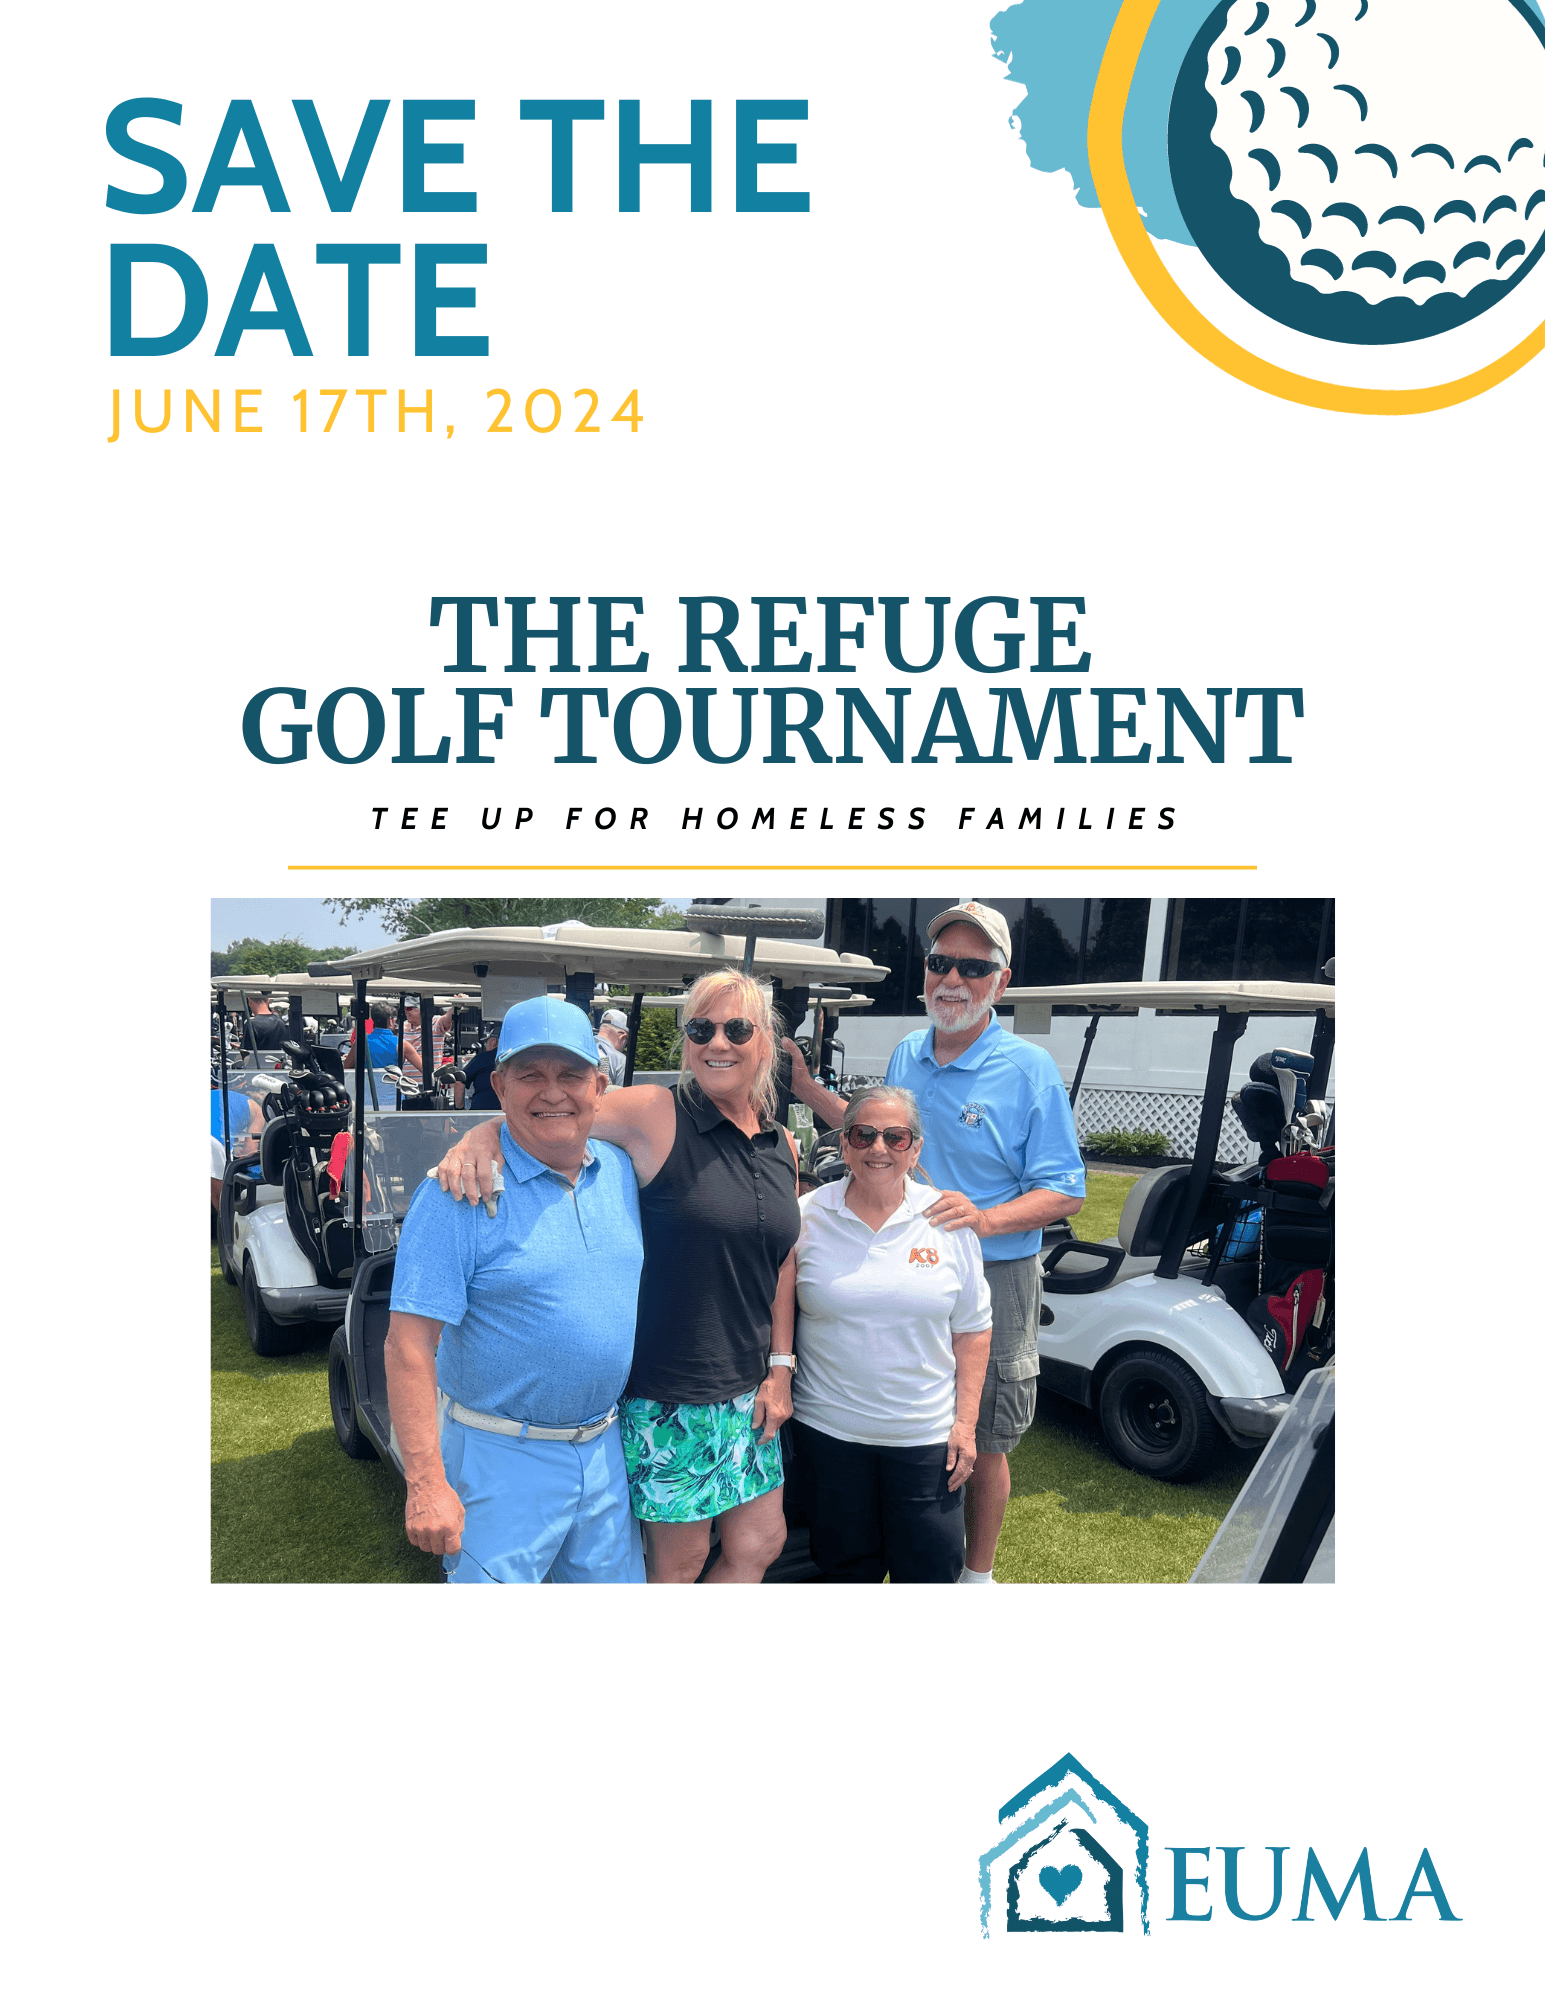 EUMA's 28th Annual Refuge Golf Tournament